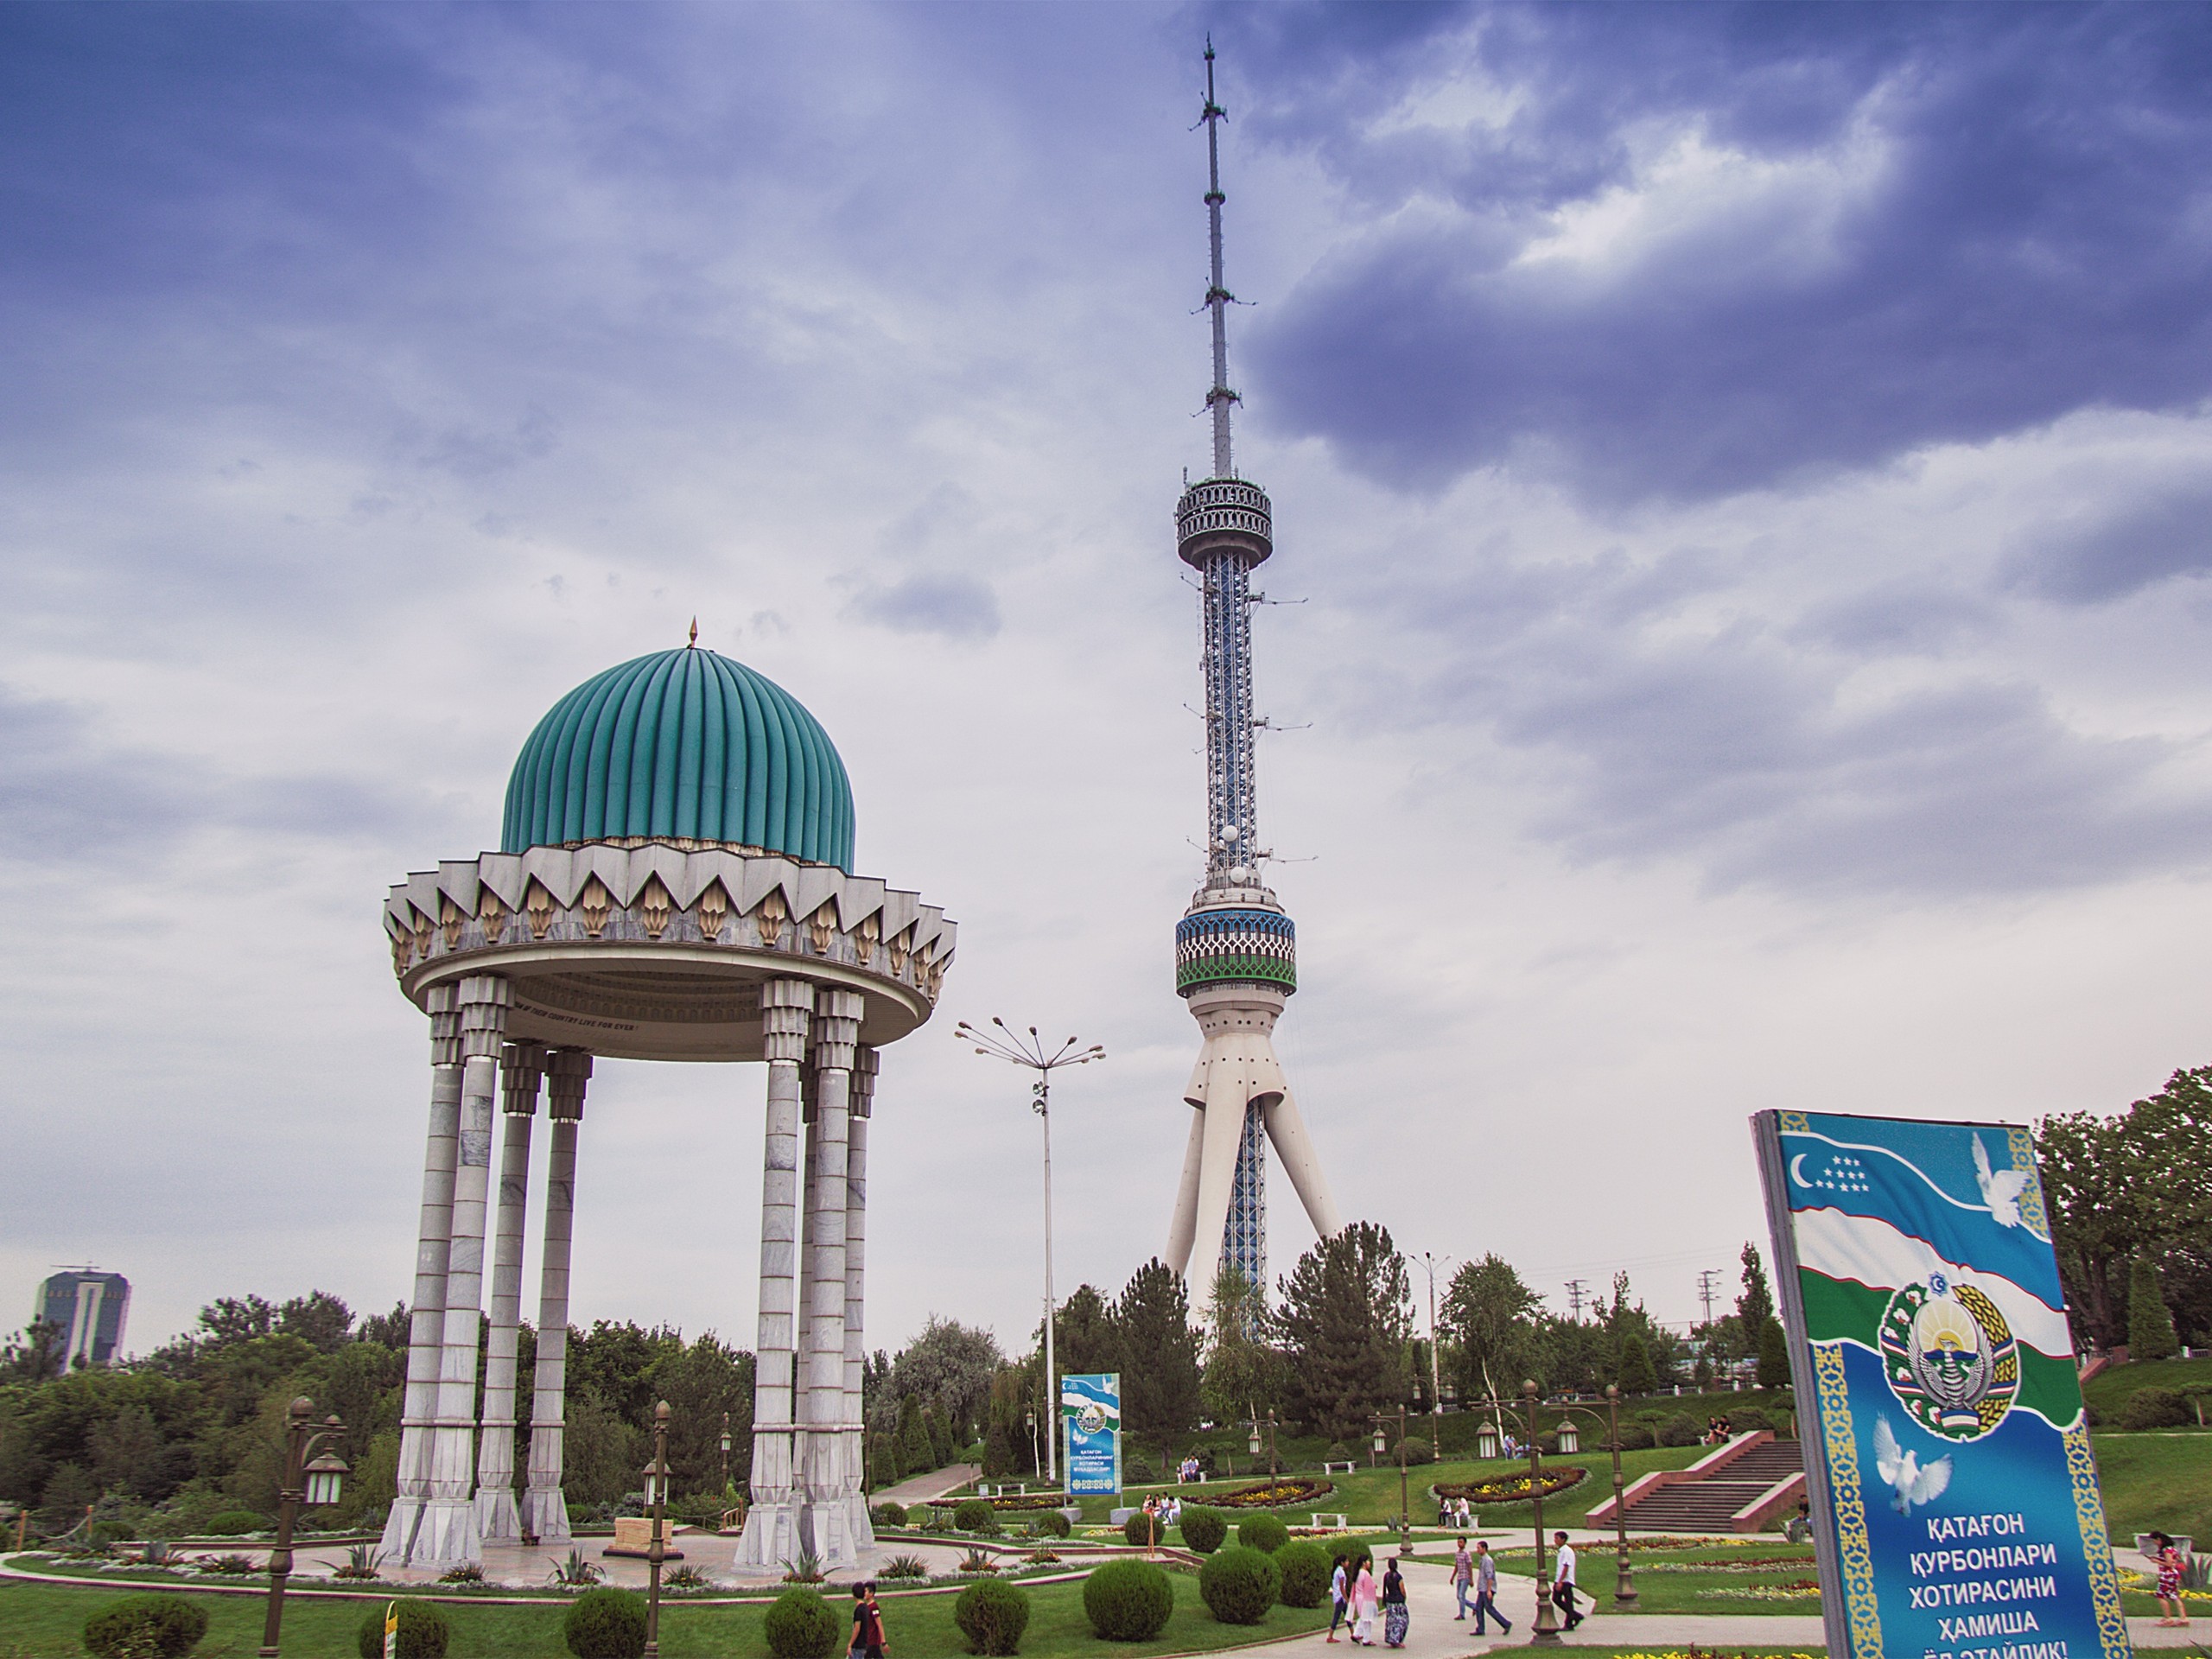 Tashkent, the capital of Uzbekistan